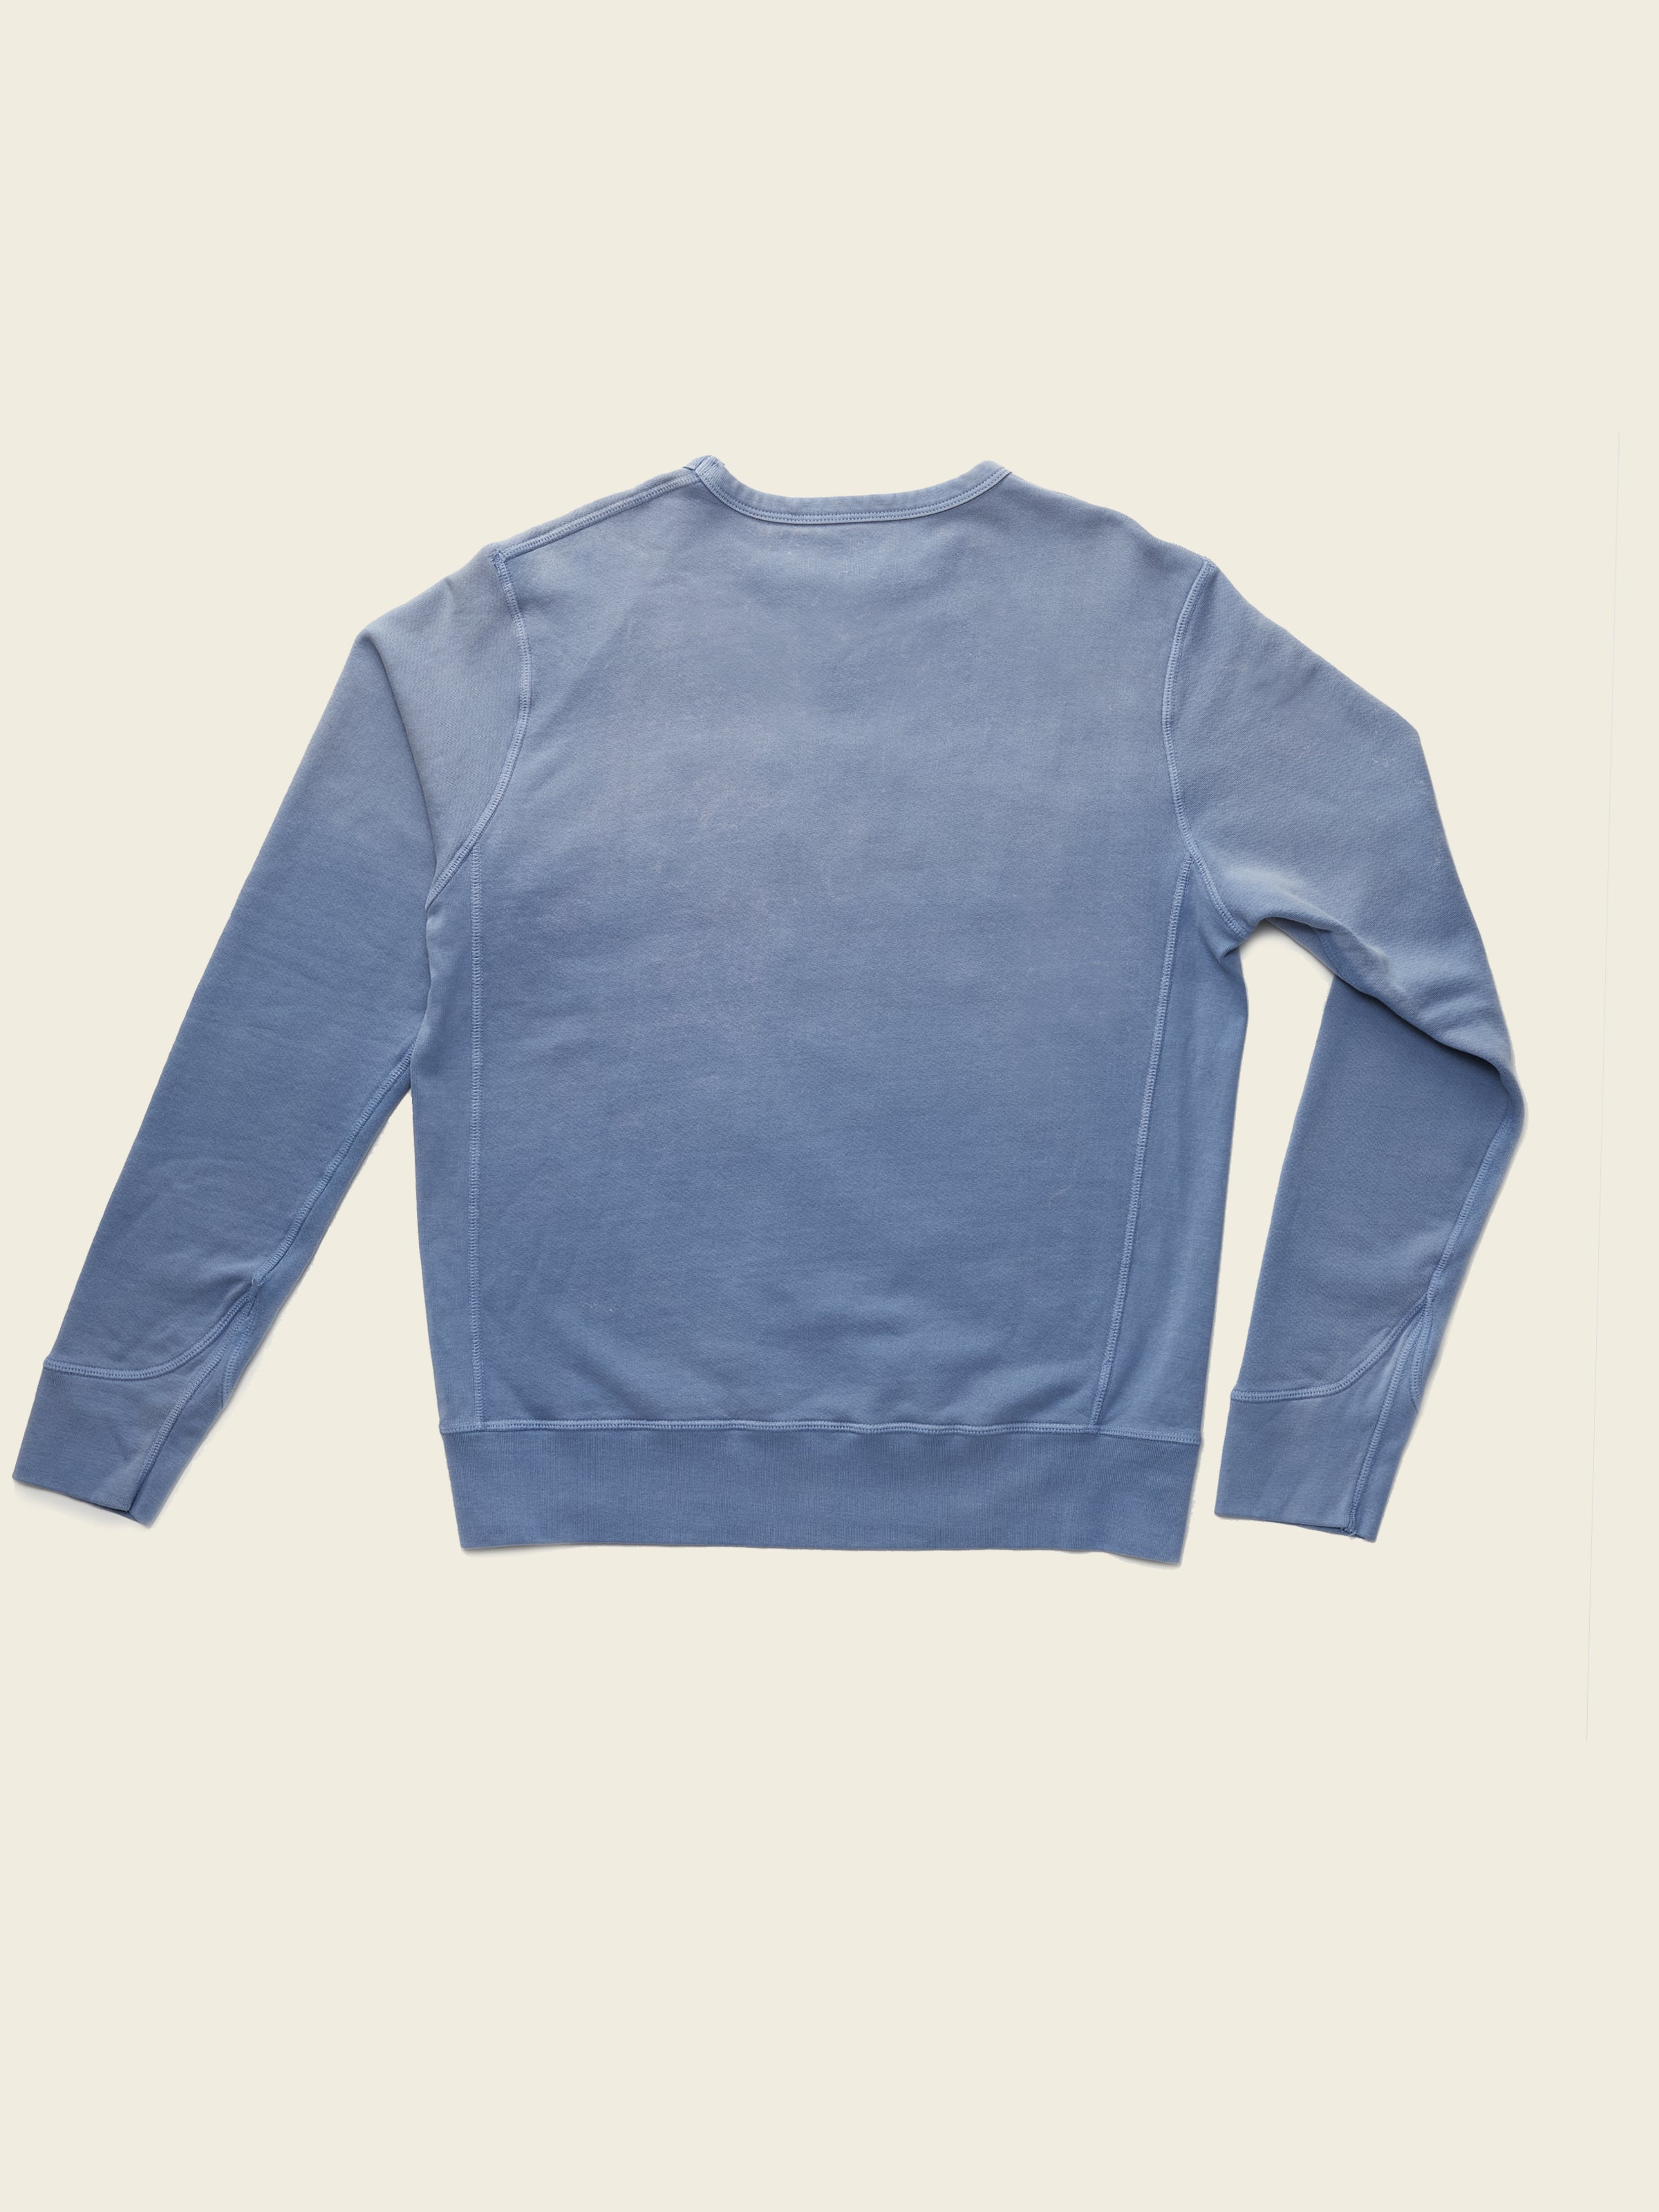 Large CFA Appliqué Motif Sweatshirt in Sunfaded Blue